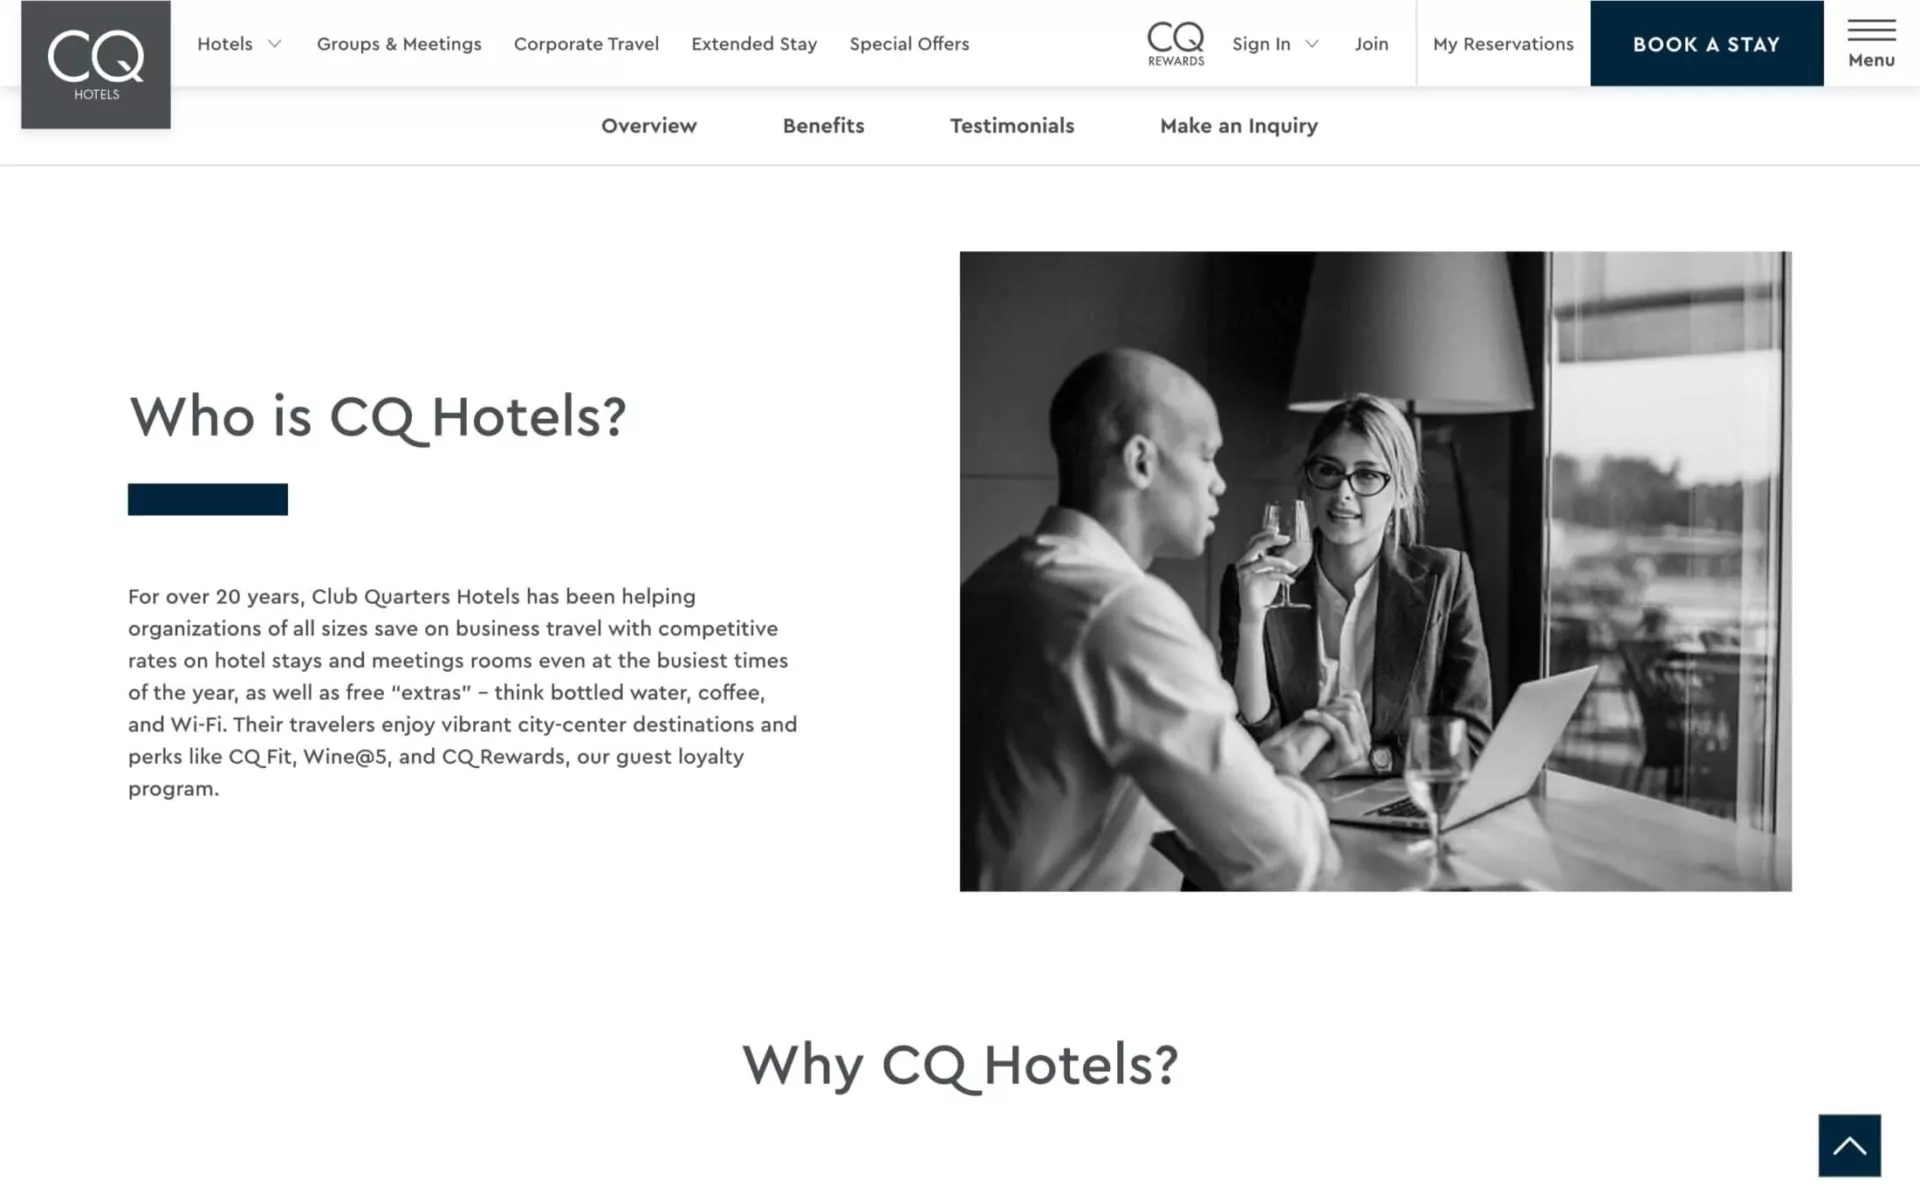 cq-hotels-case-study-desktop-06